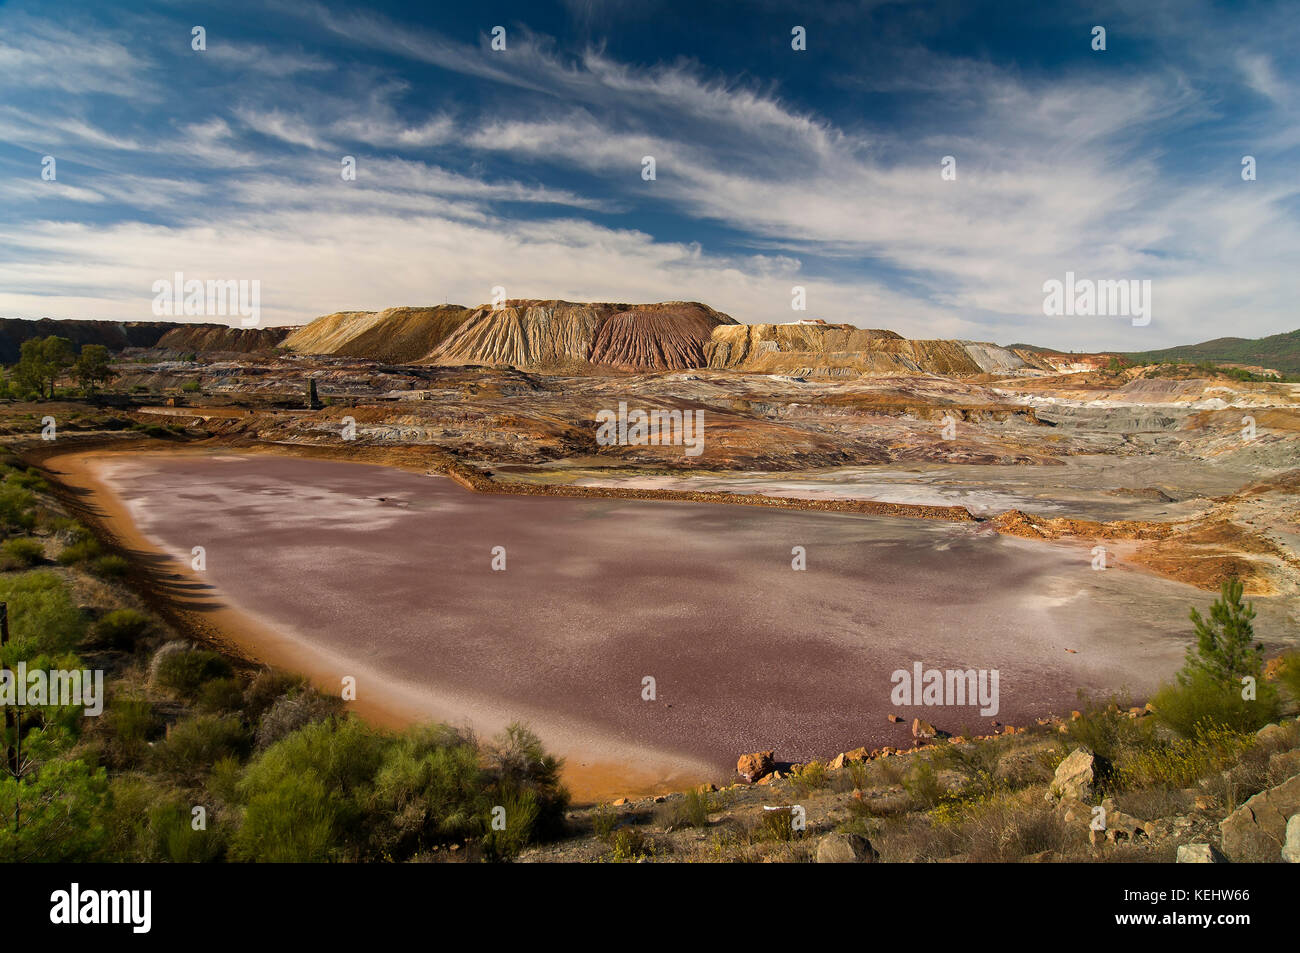 Mining landscape, Nerva, El Andevalo region, Huelva province, Region of Andalusia, Spain, Europe Stock Photo